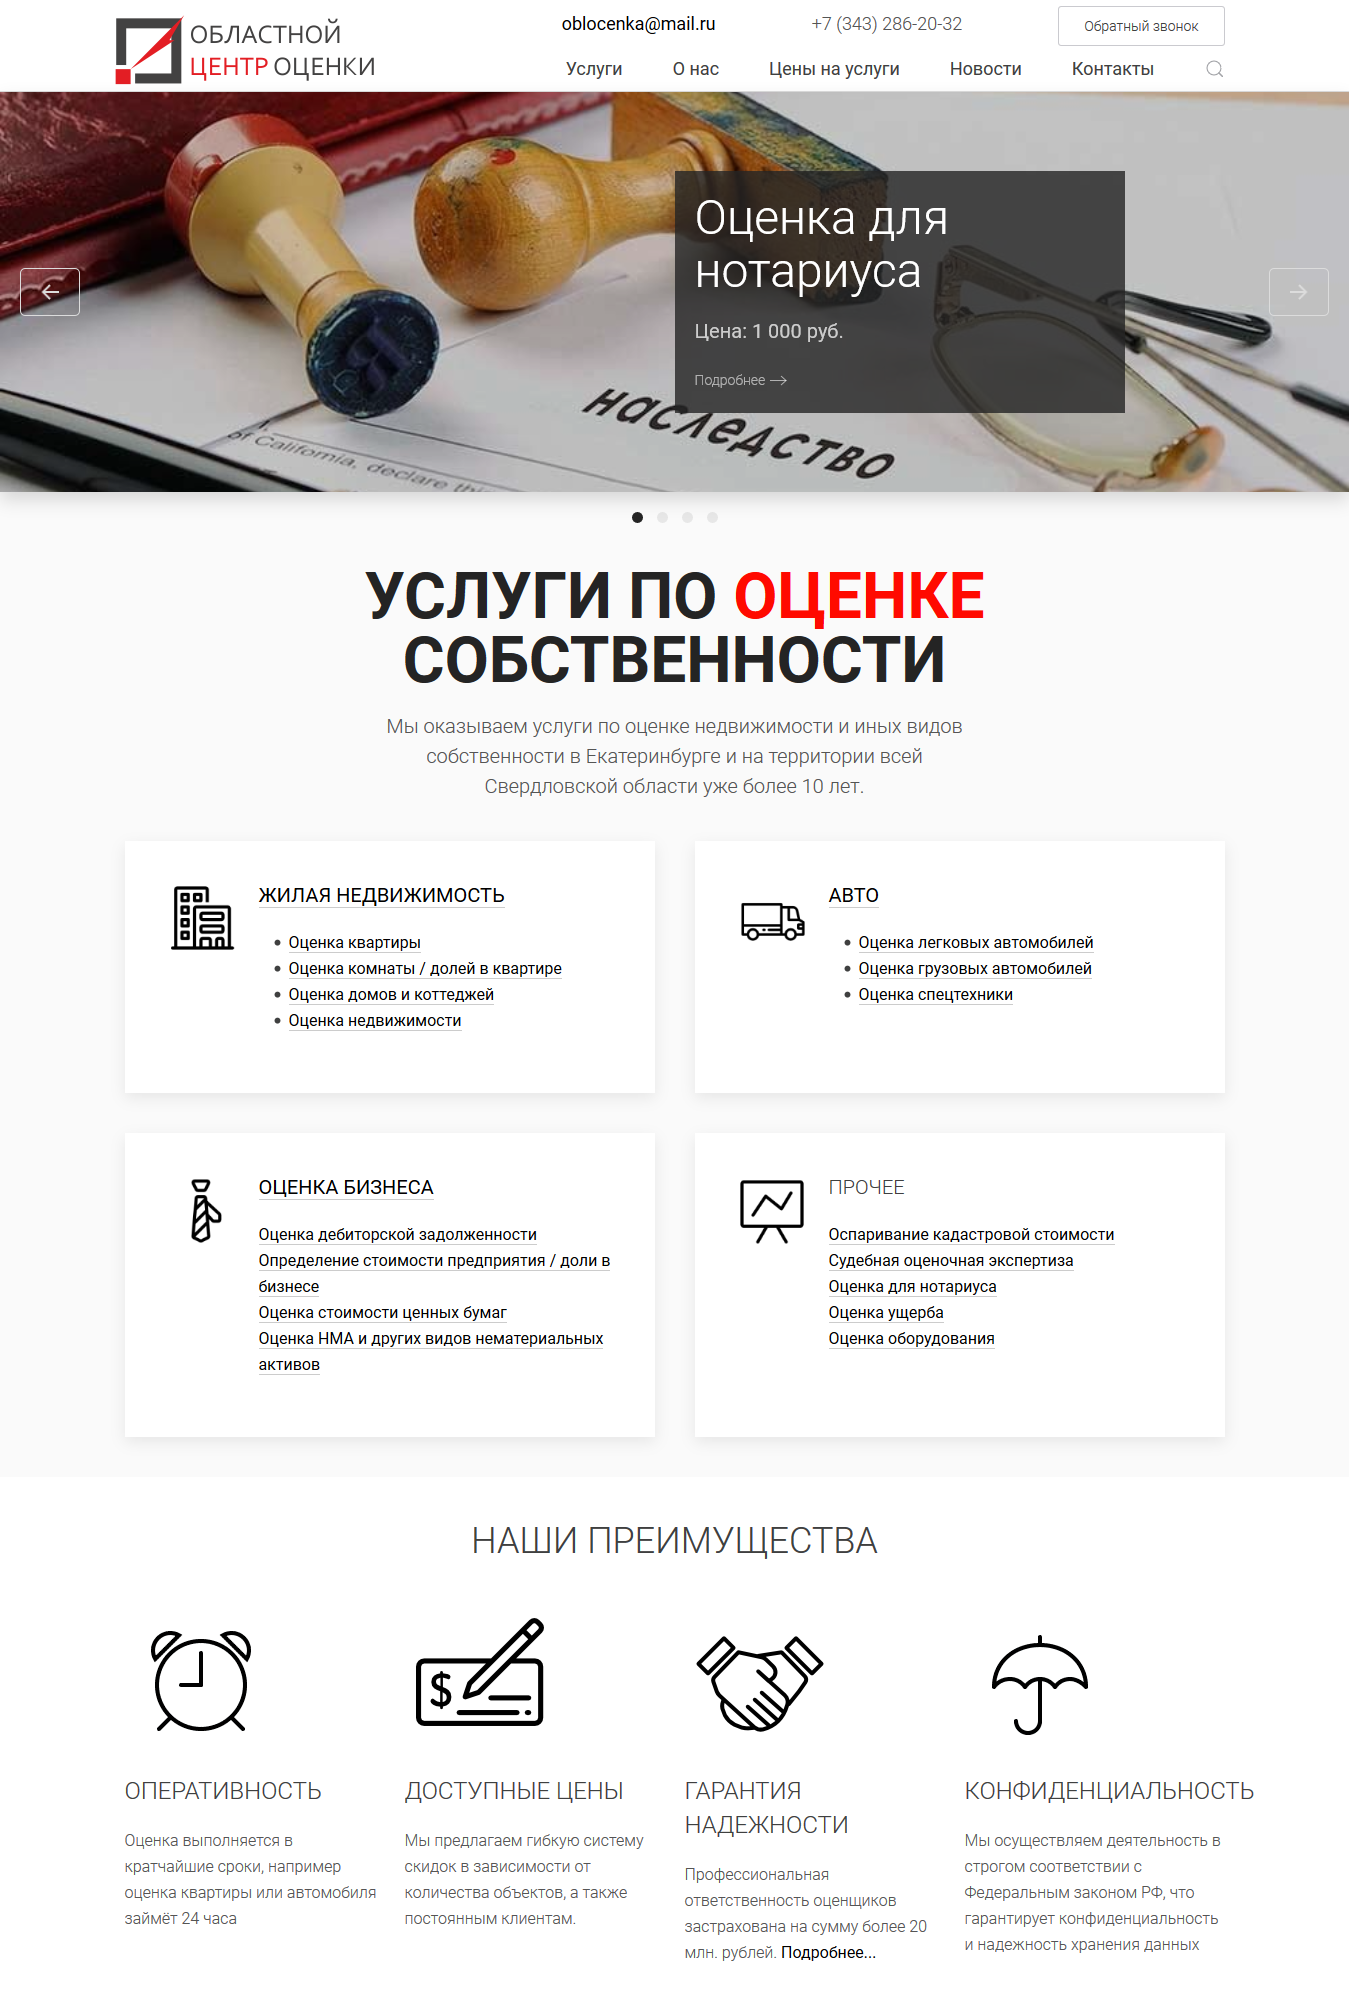  Главная страница сайта oblocenka.ru